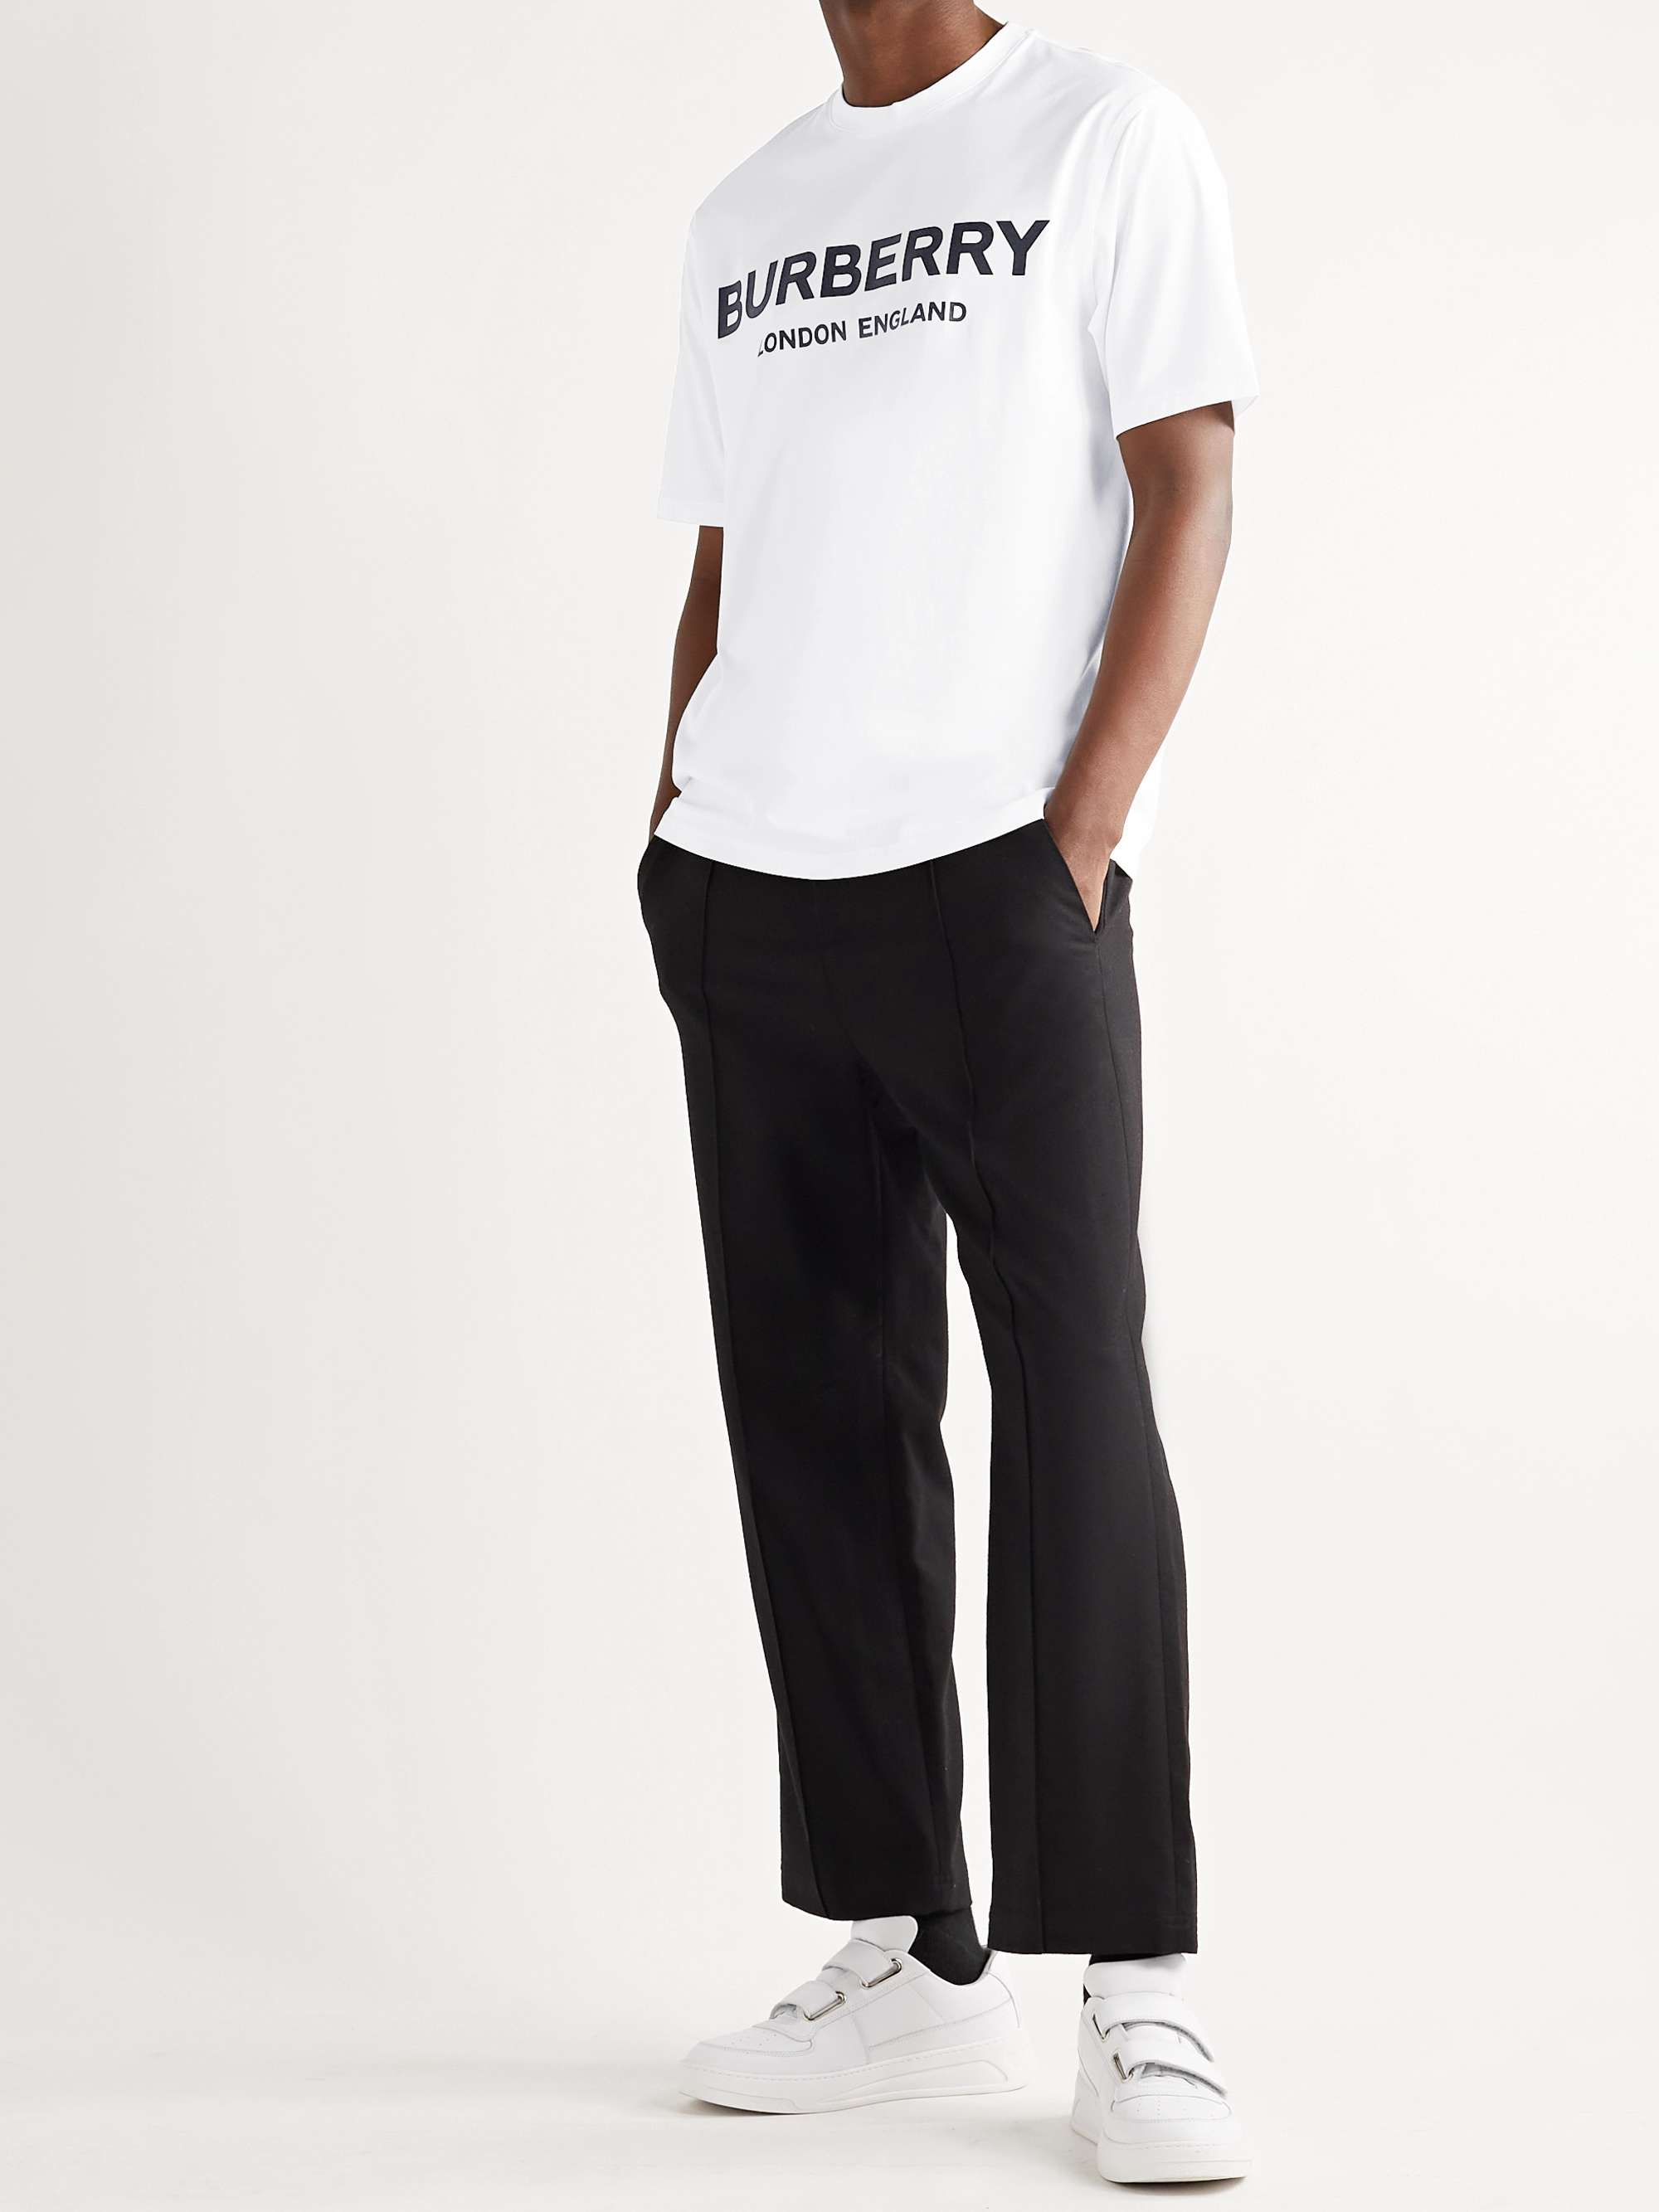 BURBERRY Logo-Print Cotton-Jersey T-Shirt for Men | MR PORTER